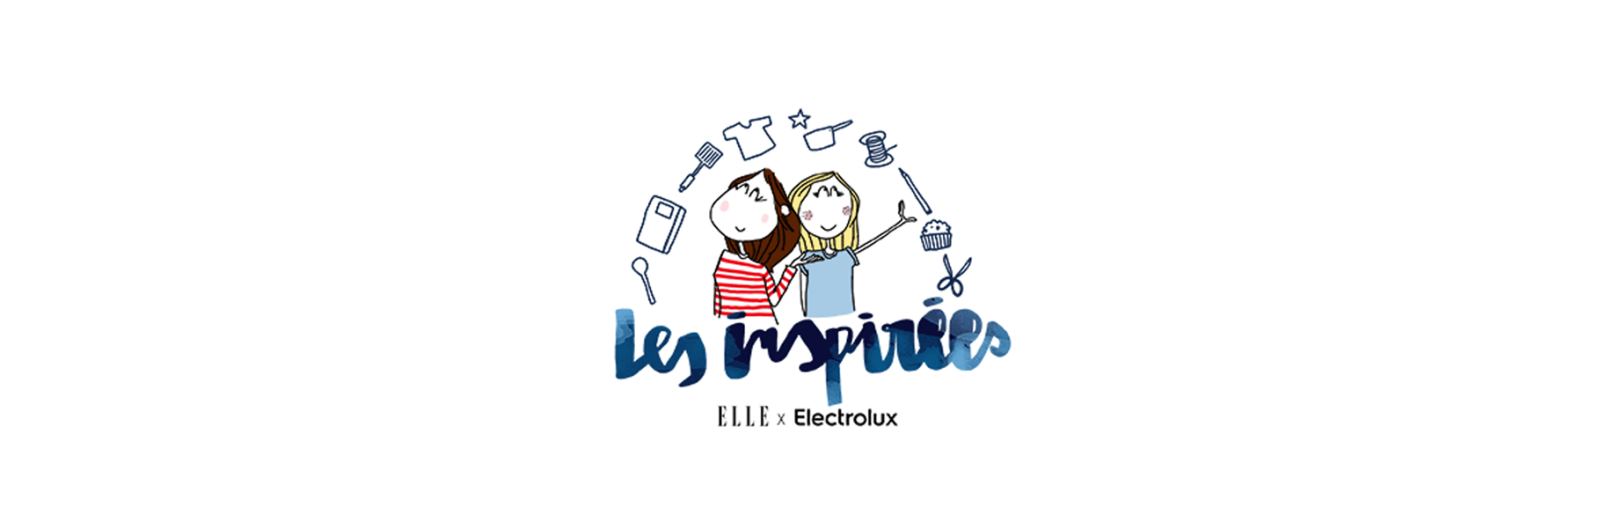 ELLE x Electrolux